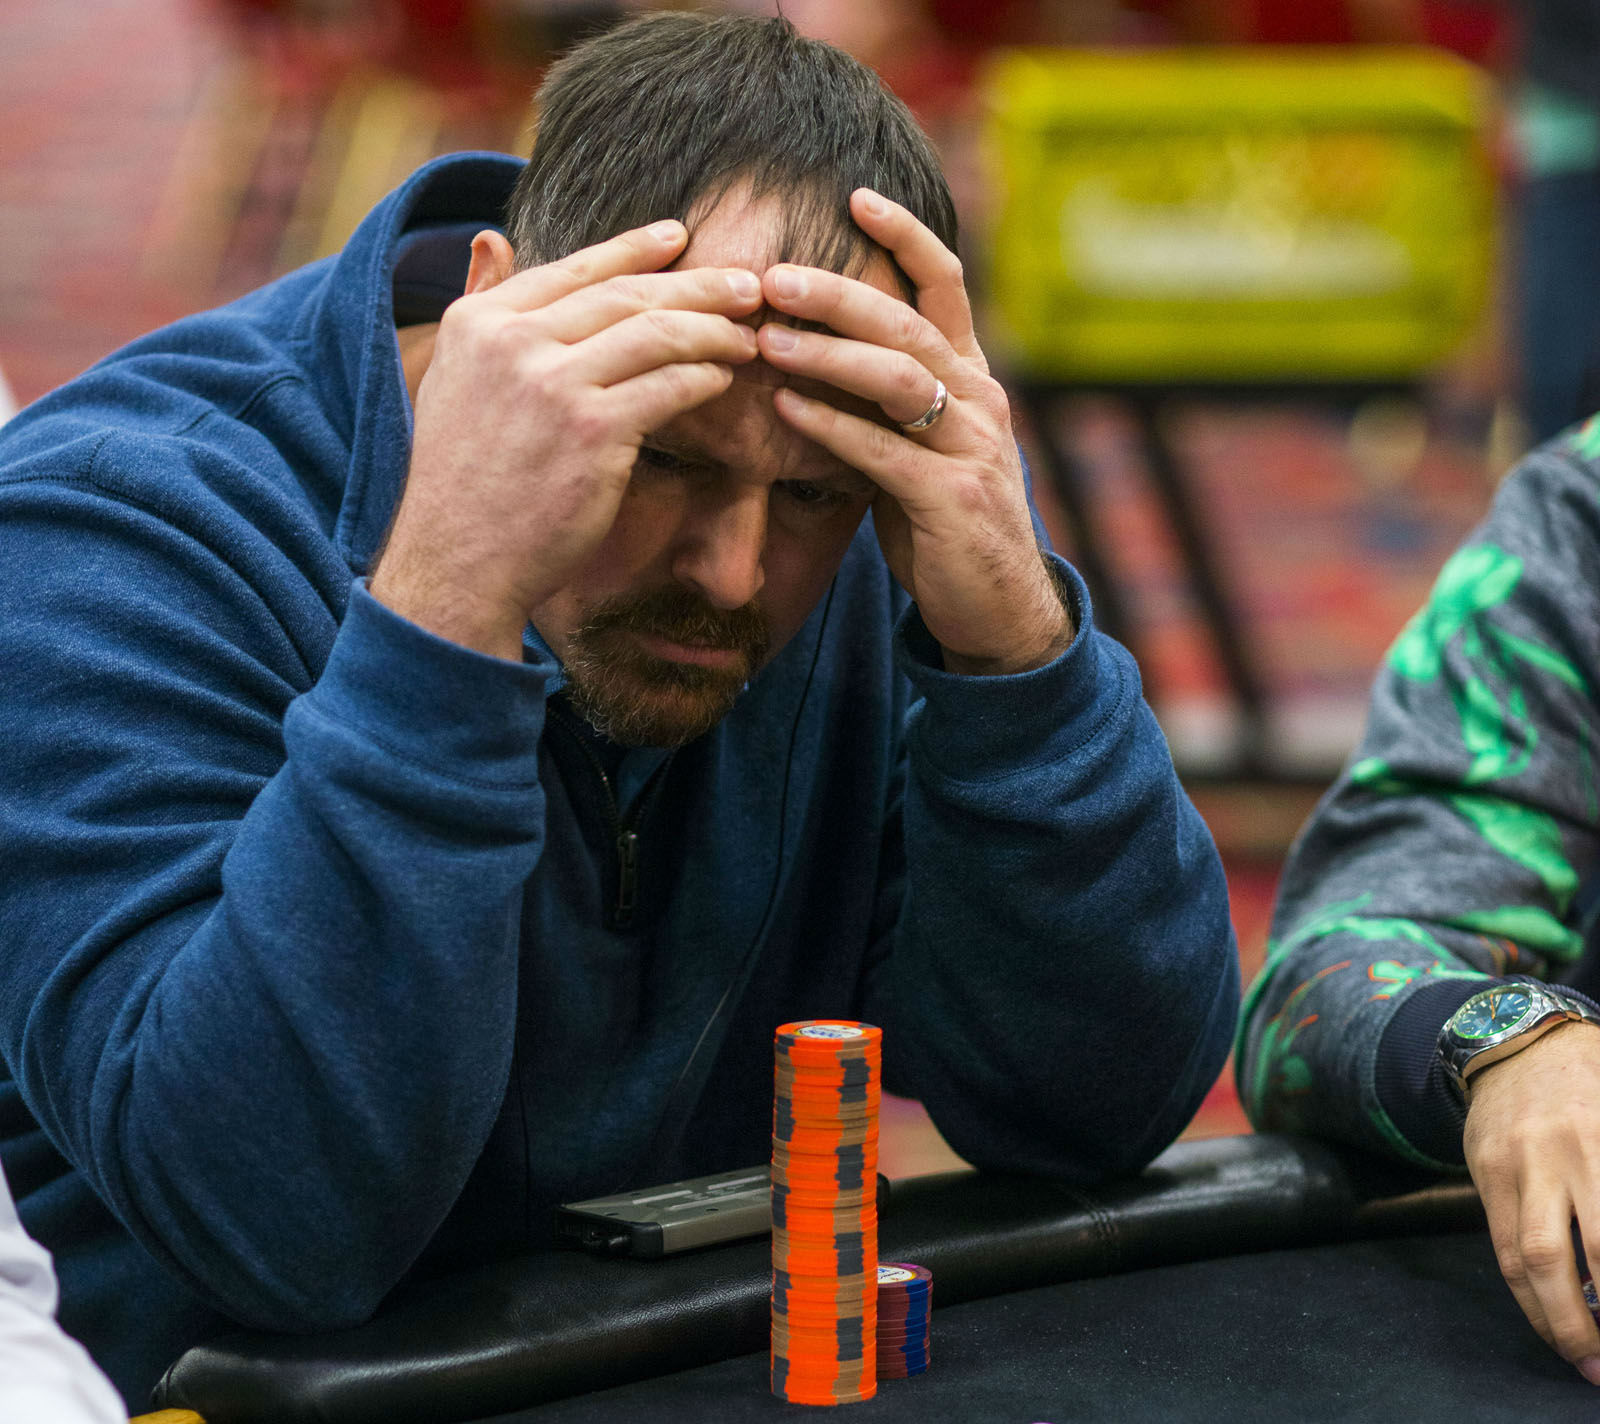 O que é Tilt no poker e como evitá-lo?